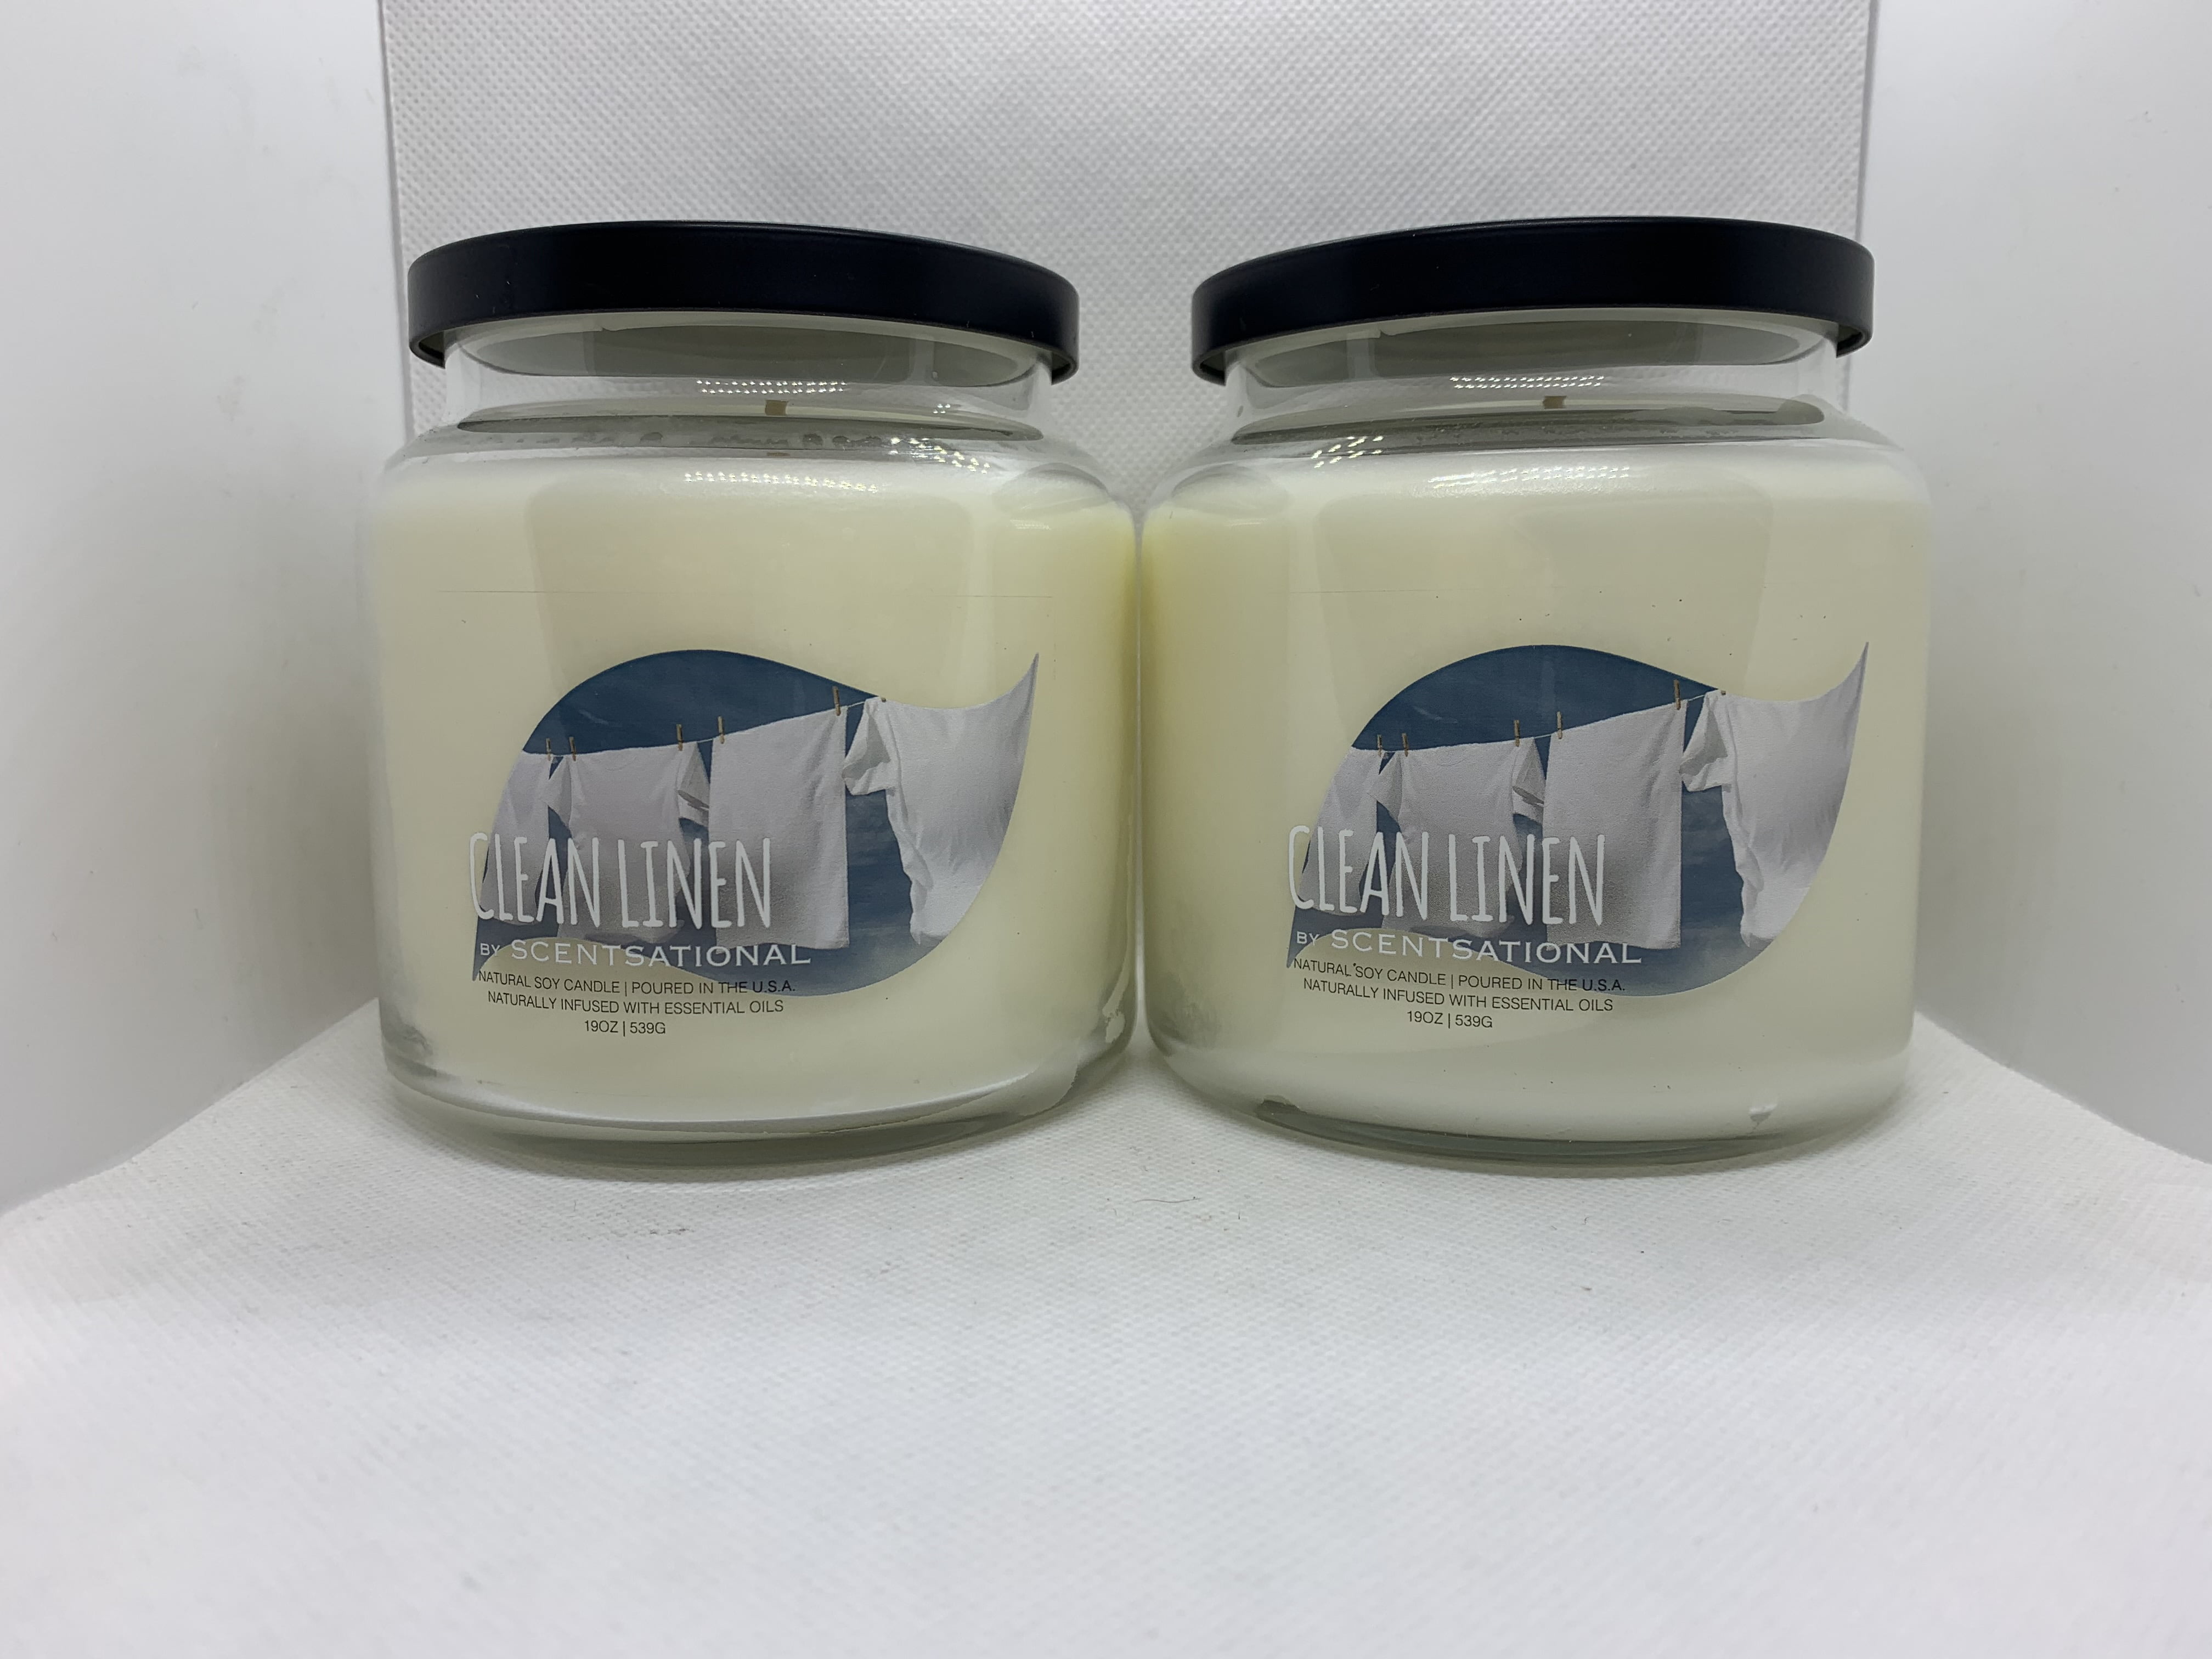 CLEAN LINEN Fragrance 14 oz. Scentsational Natural Soy Candle